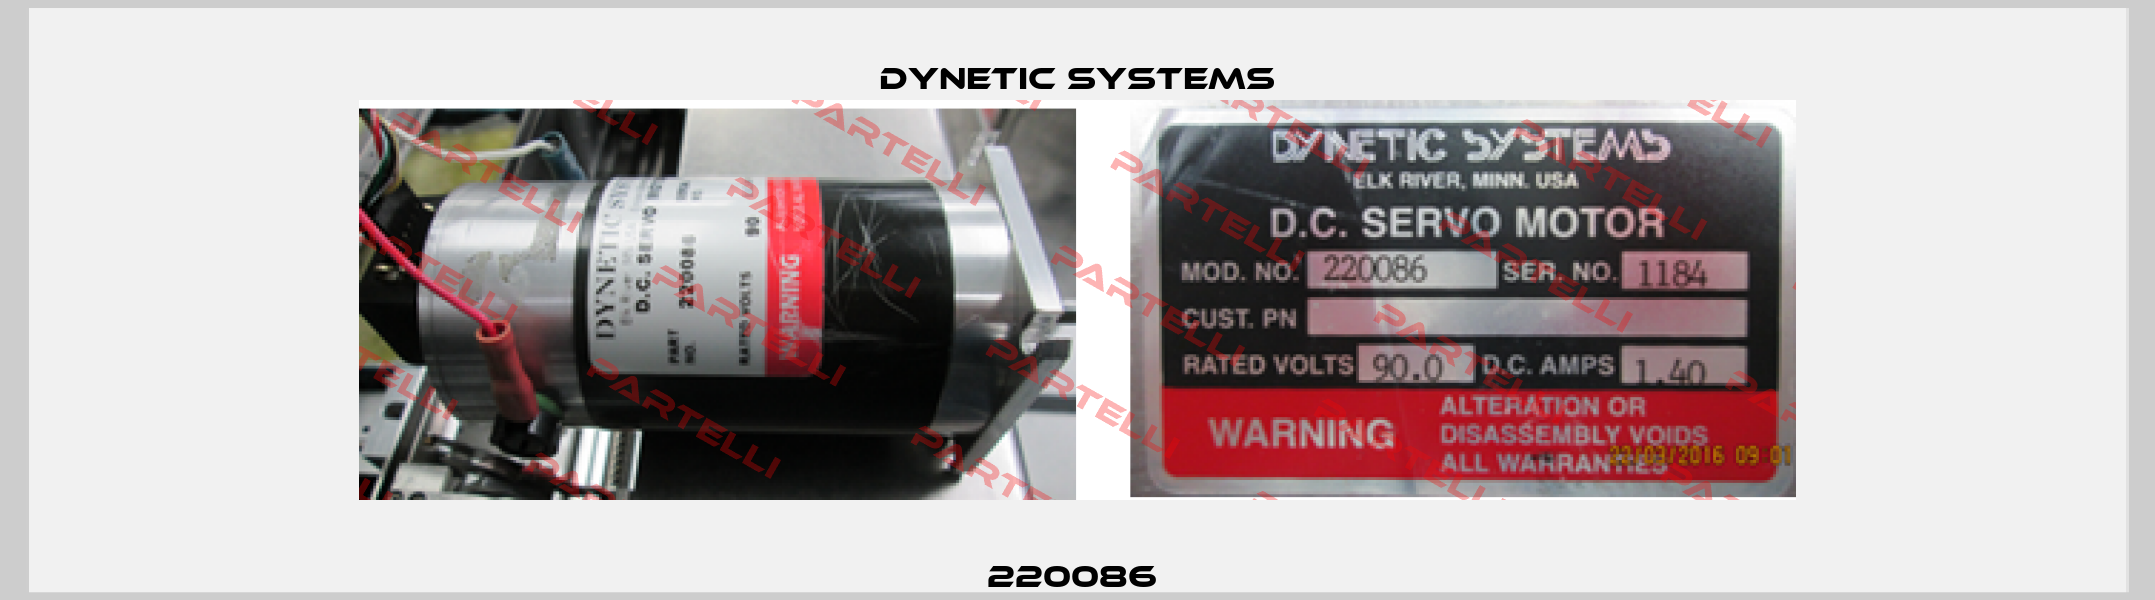 220086  Dynetıc Systems